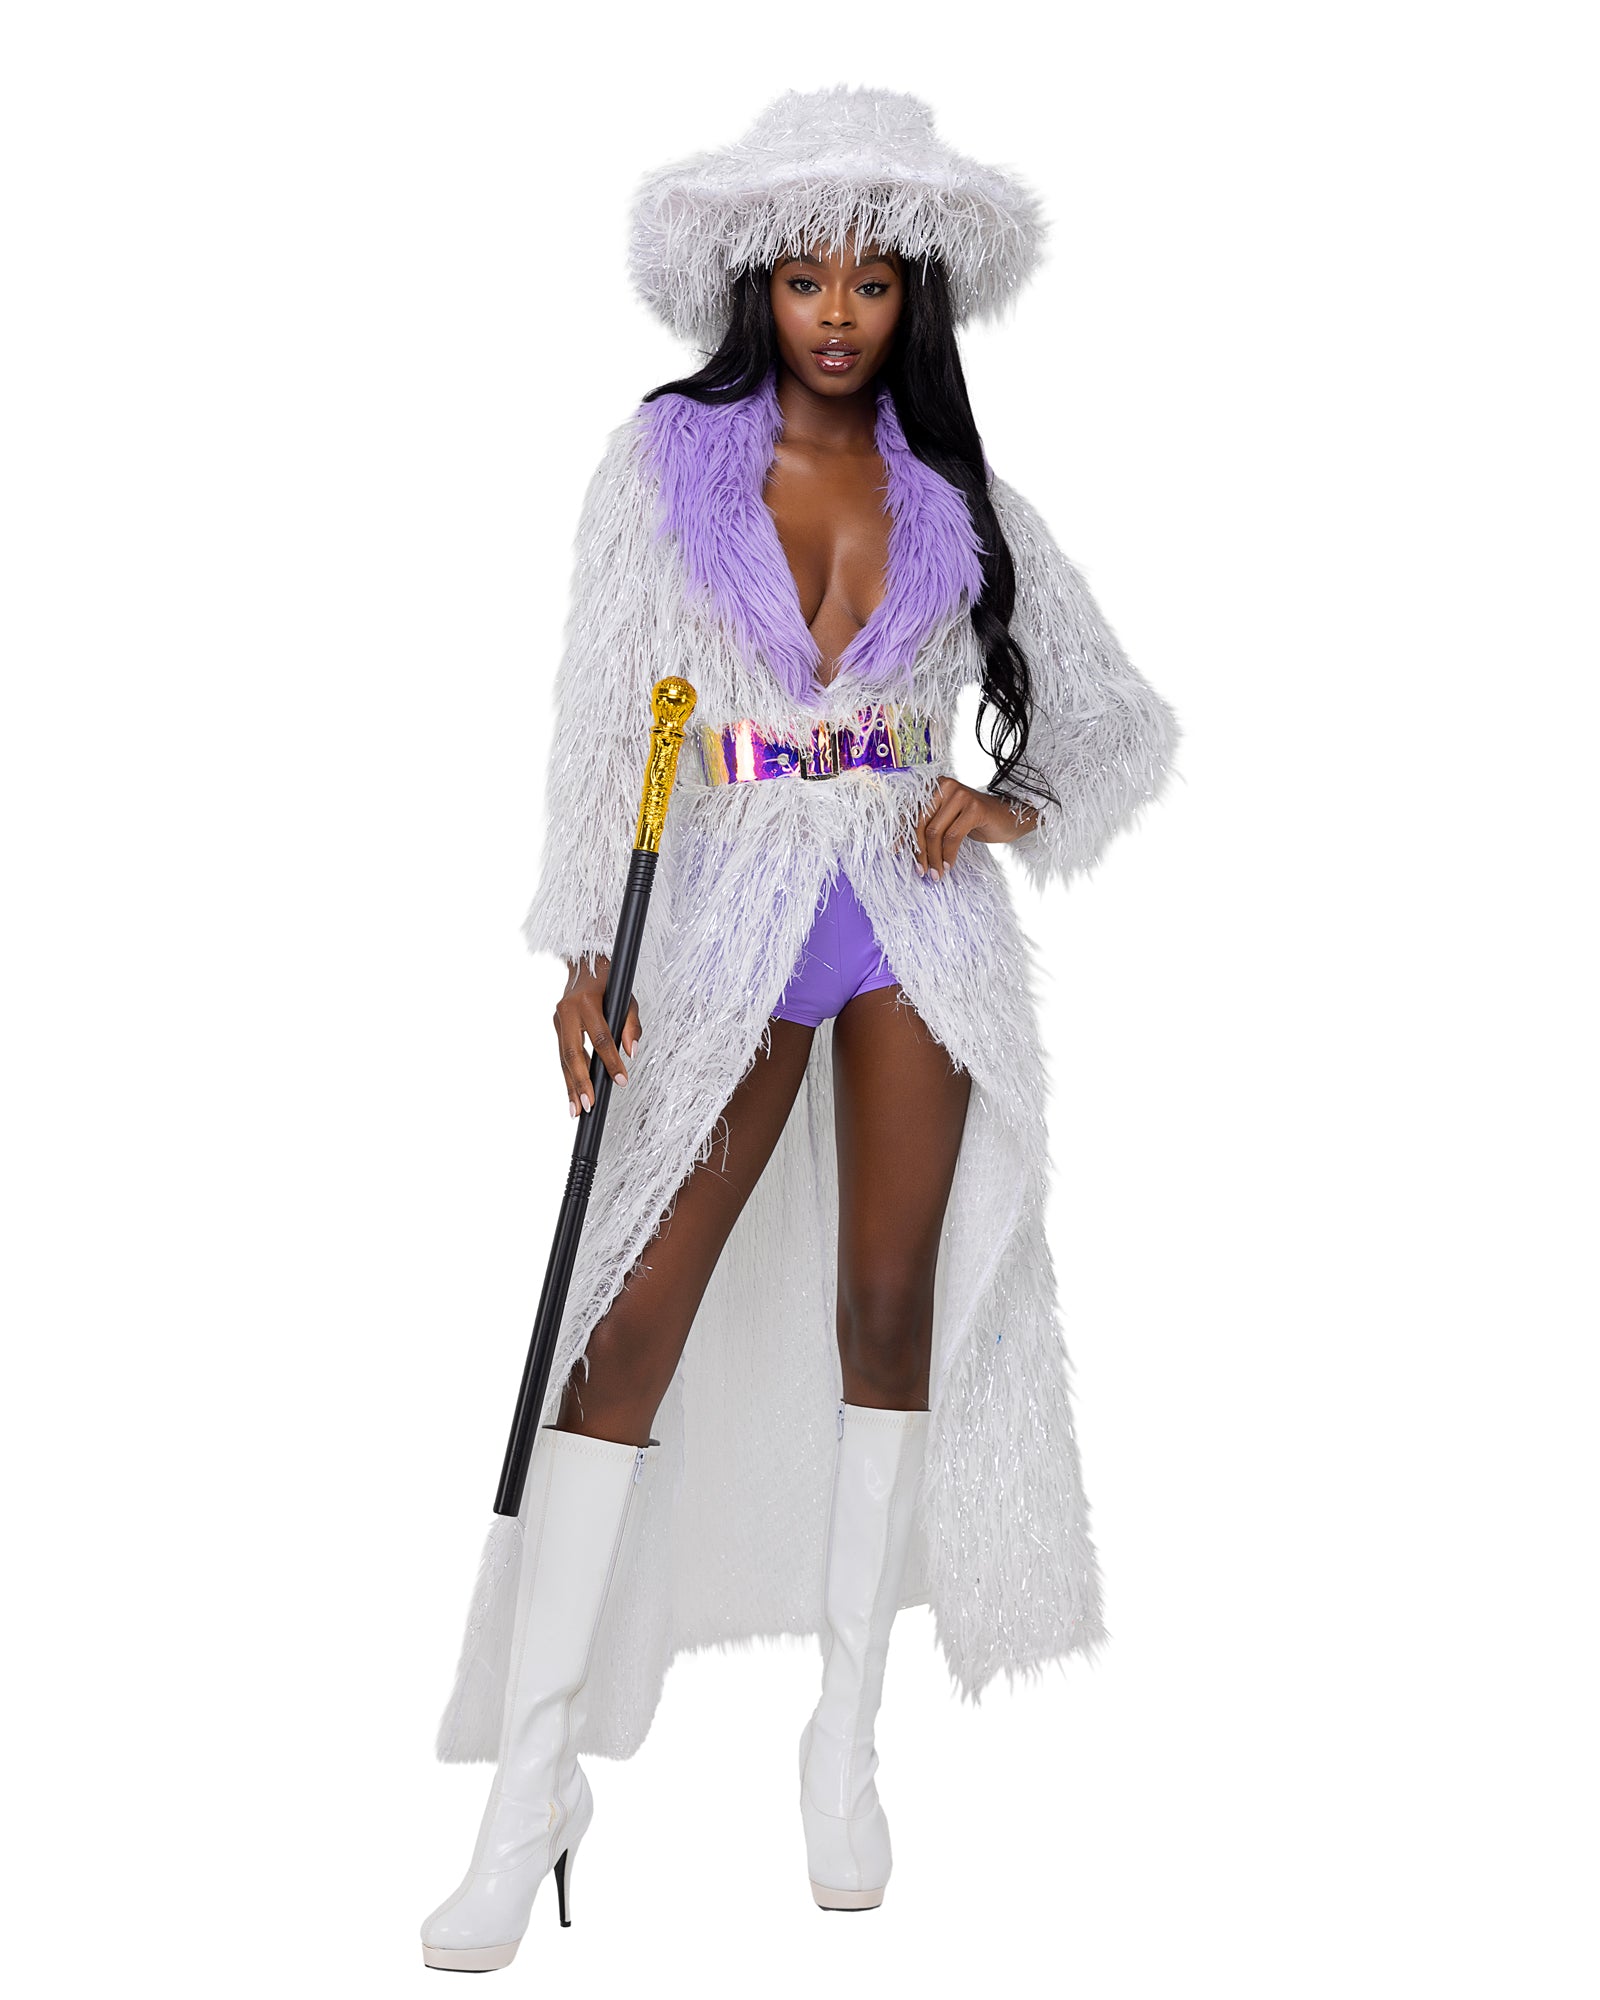 Robe Princesse Femme Médiévale pour Cosplay Halloween et Carnaval